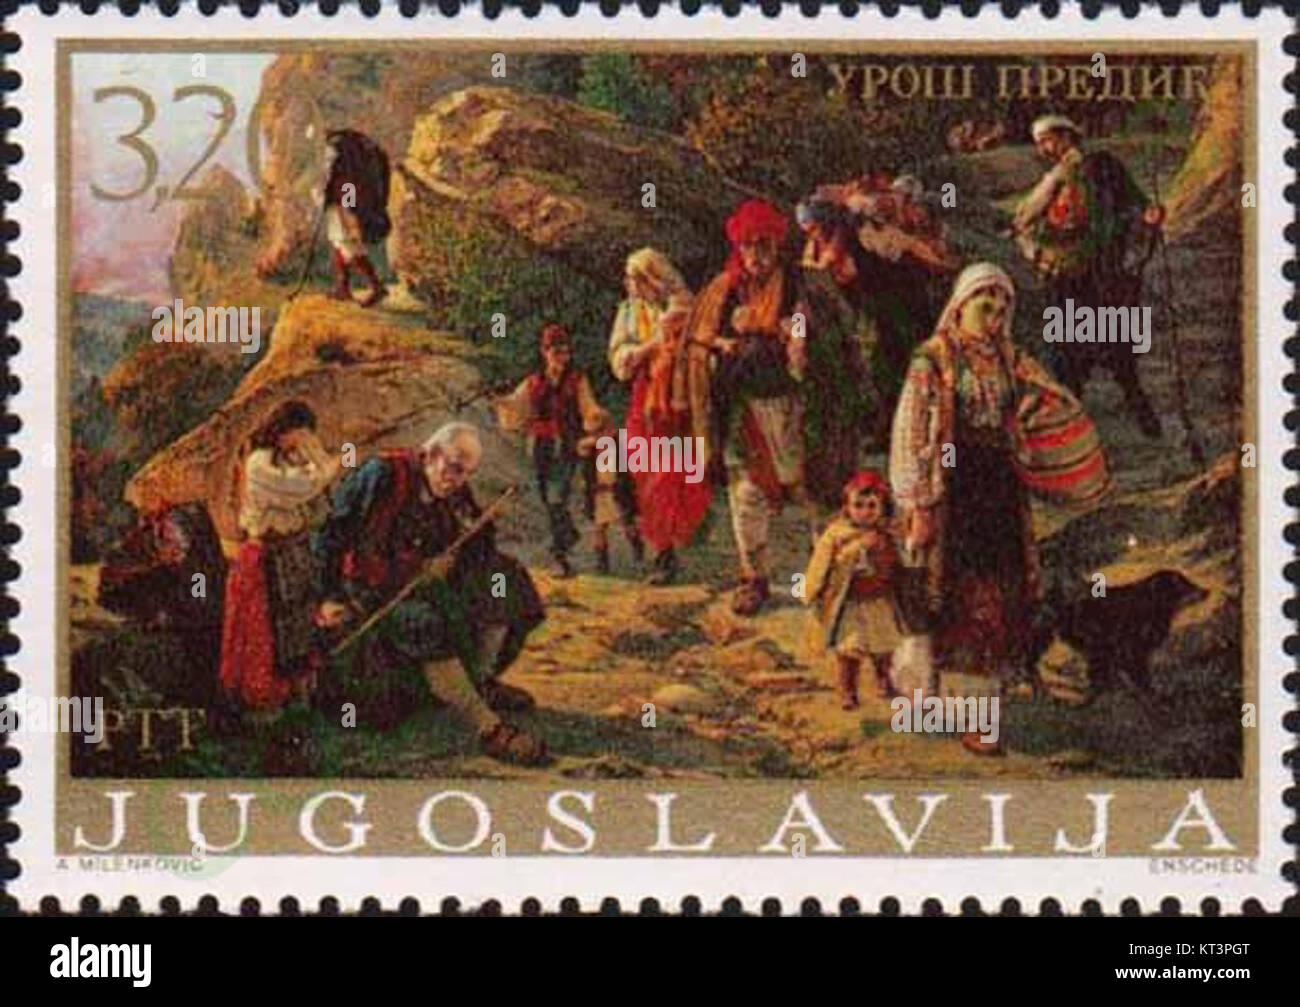 Herzegovina refugees by UroC5A1 PrediC487 1976 Yugoslavia stamp Stock Photo